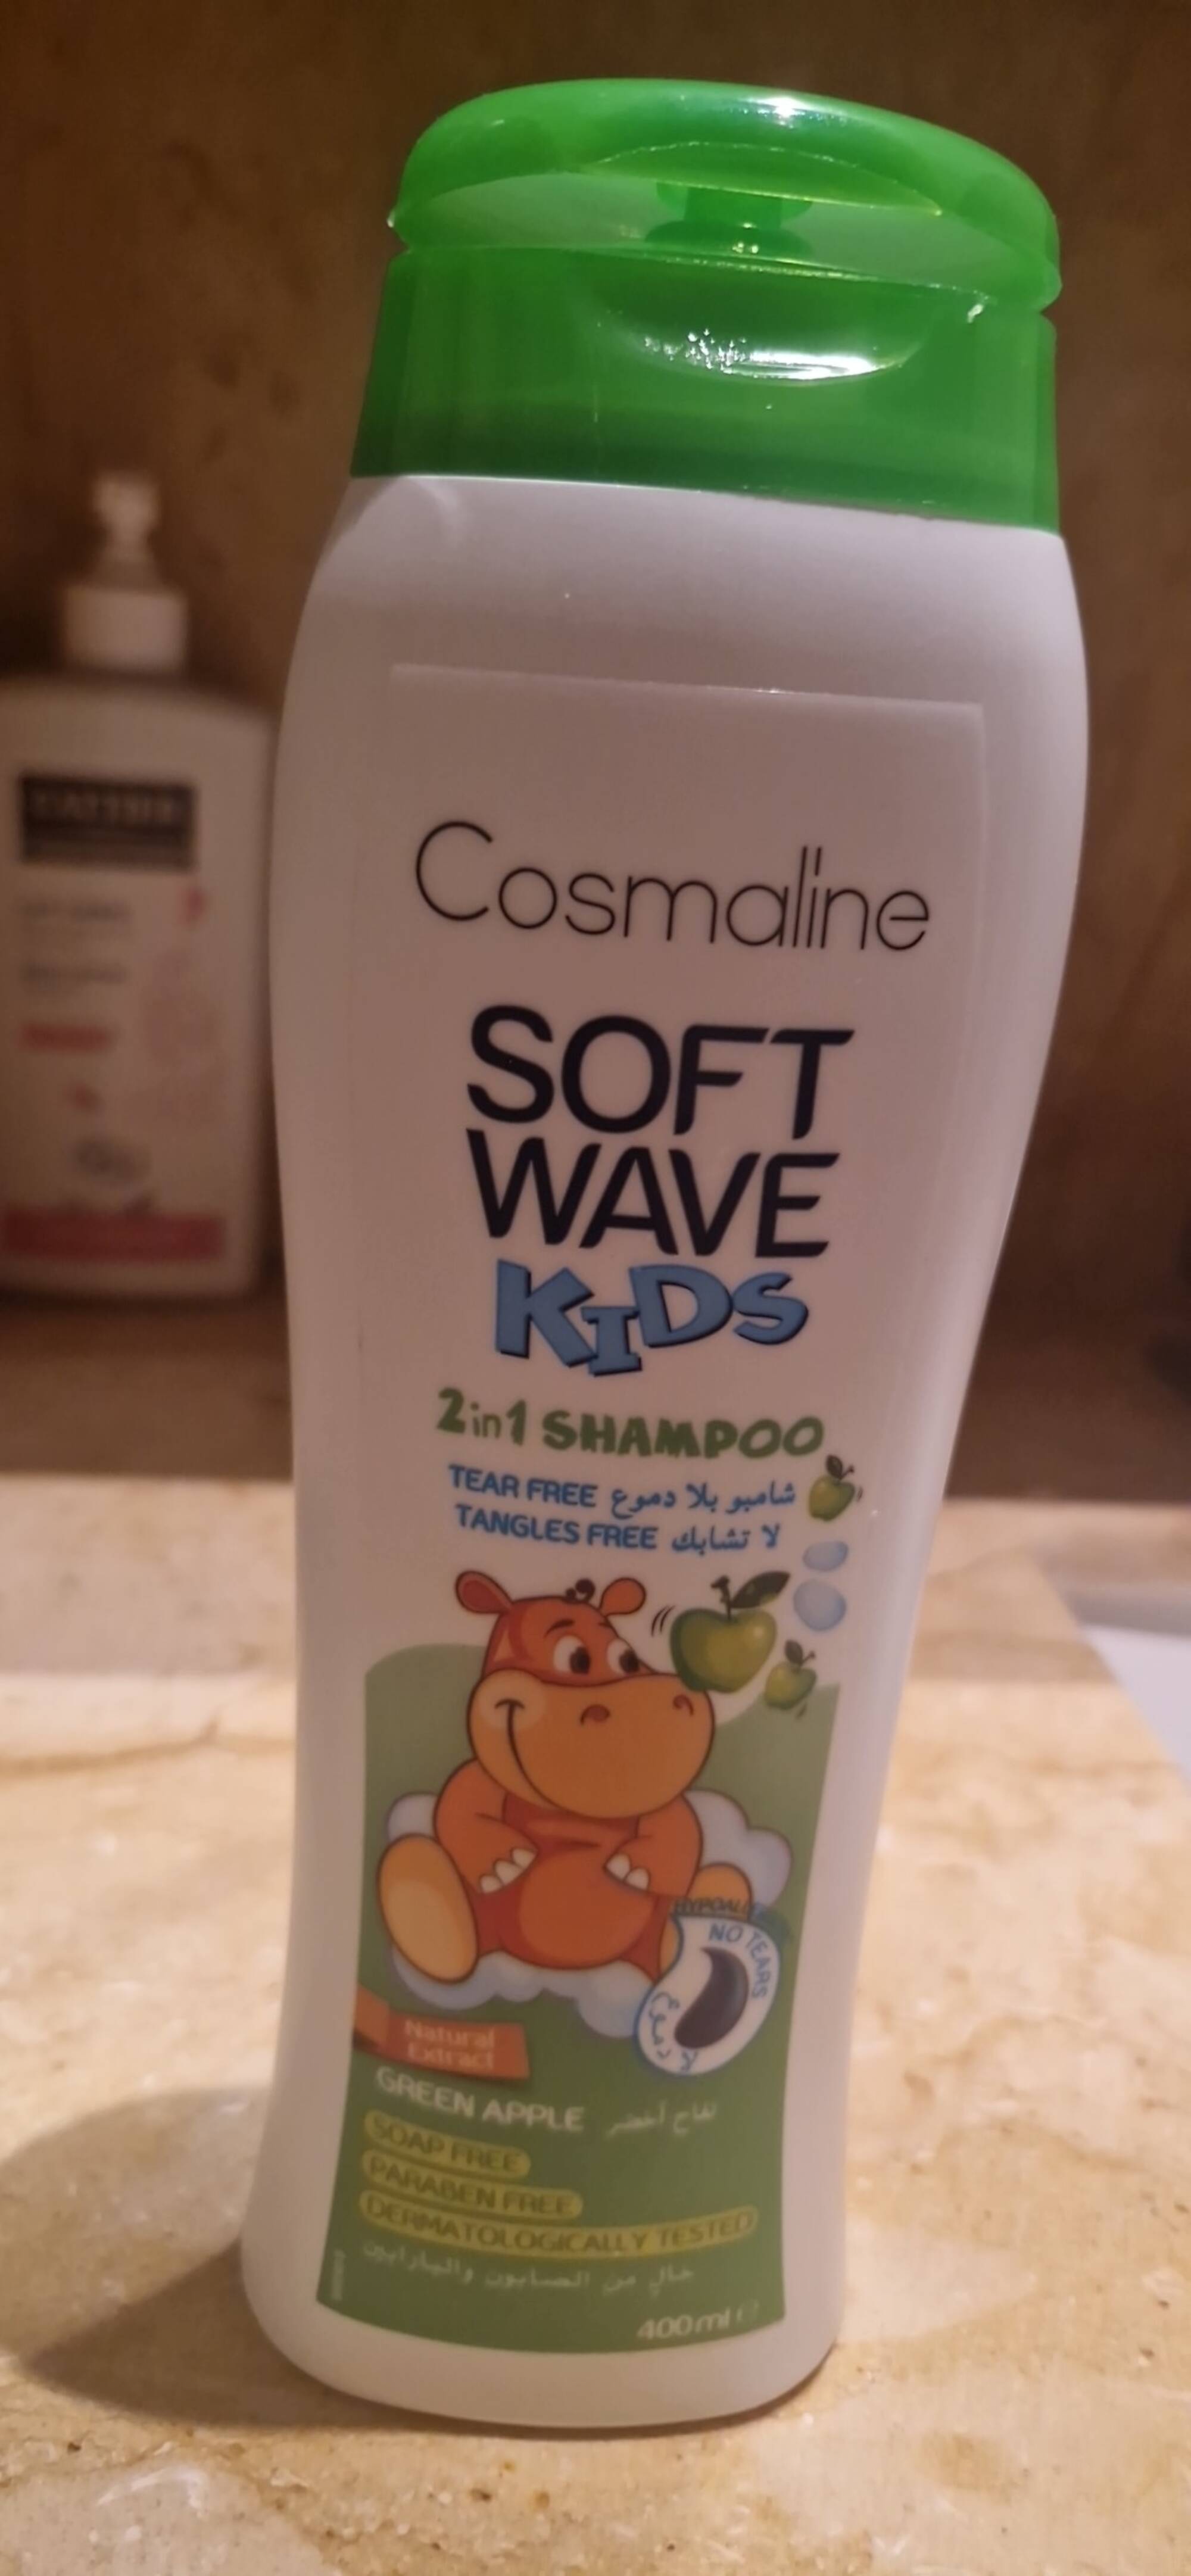 COSMALINE - Soft wave kids - 2 in 1 shampoo